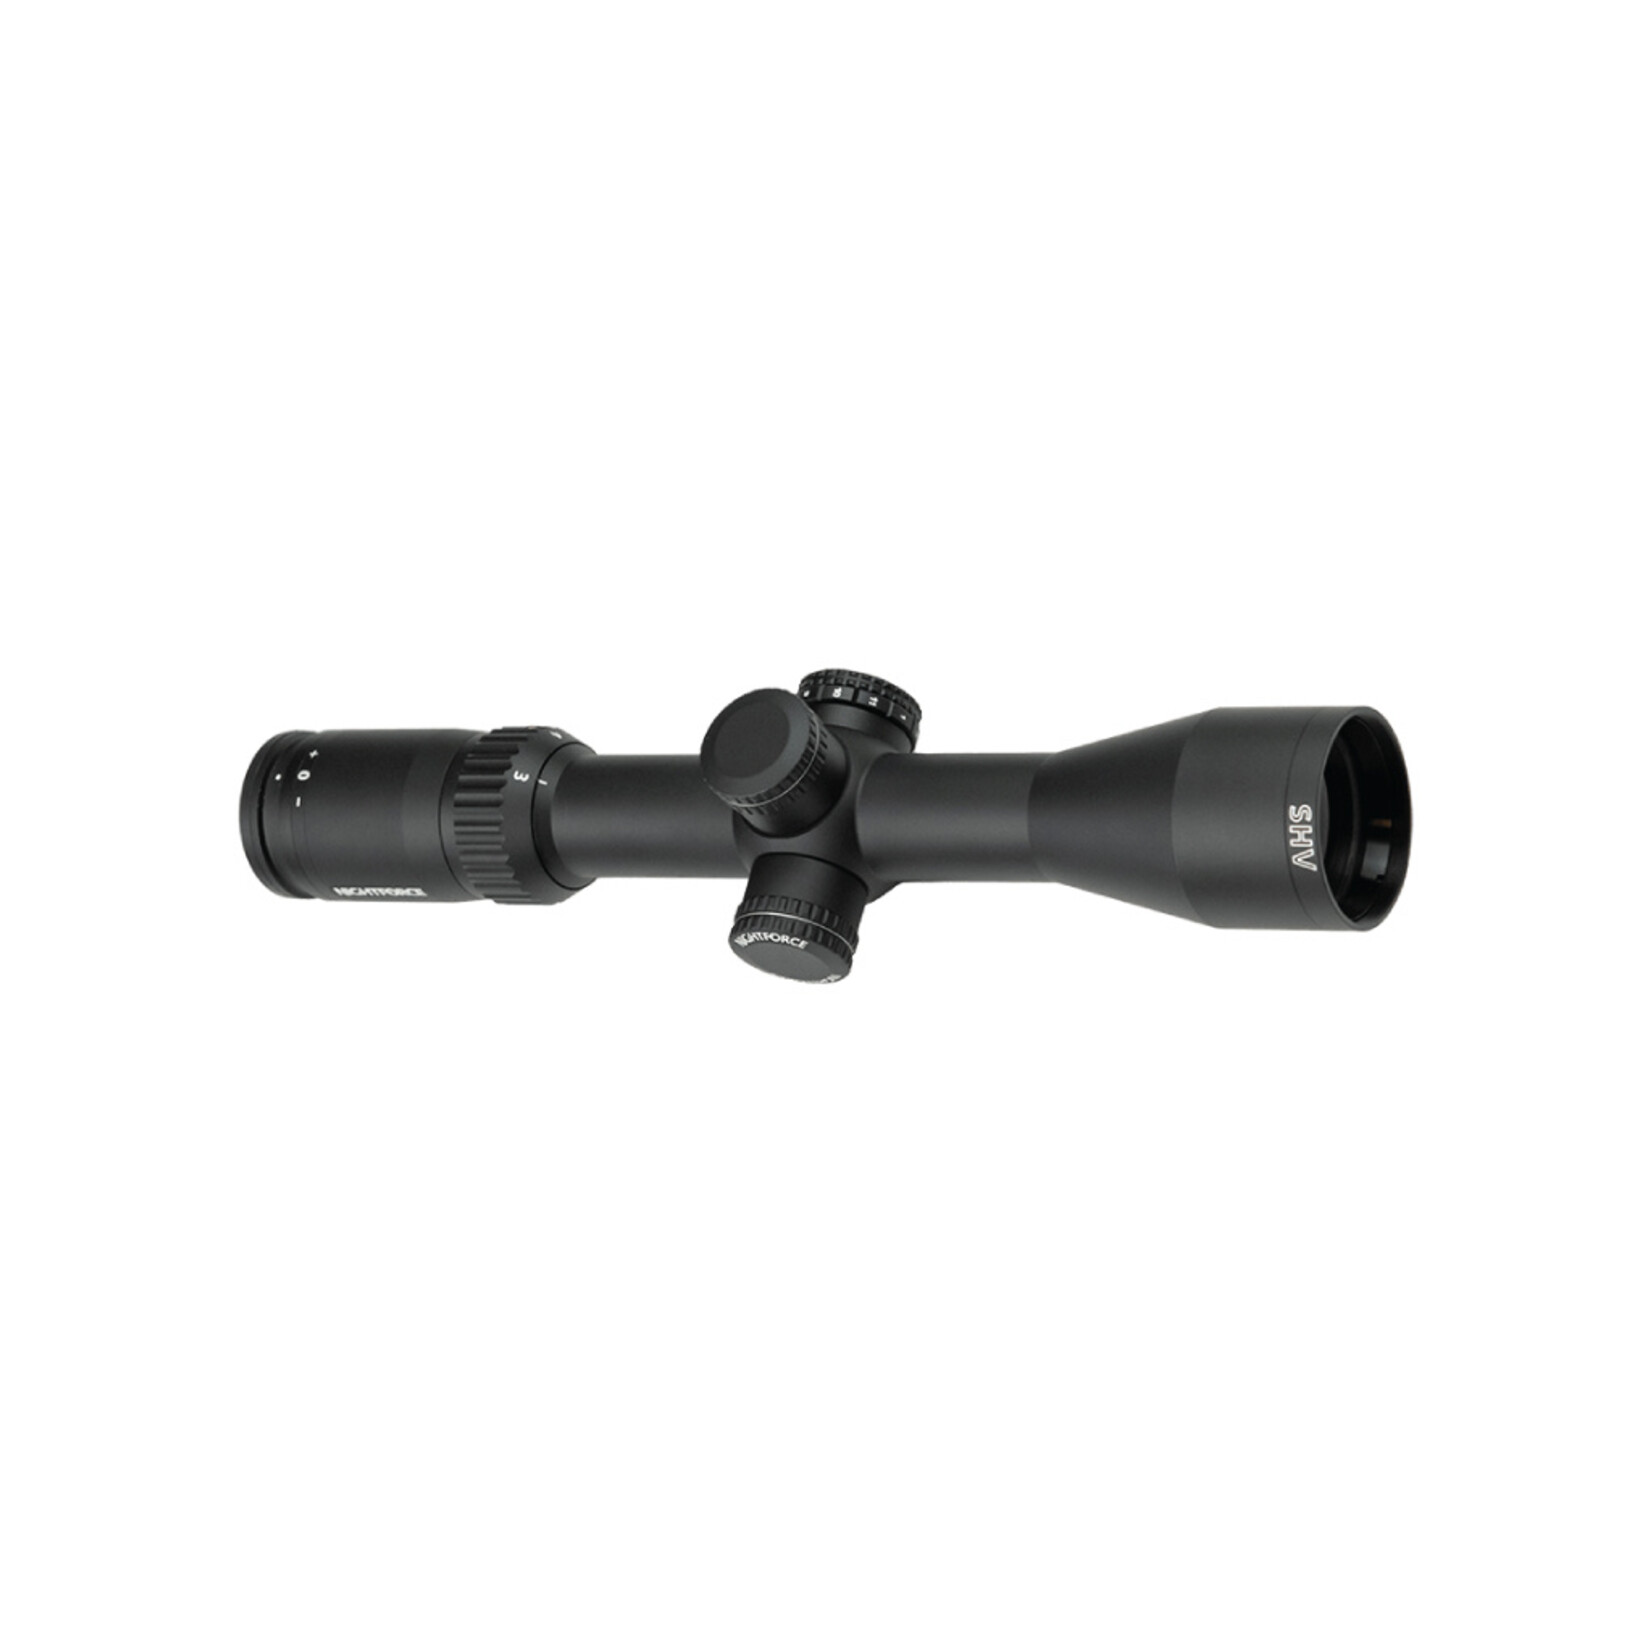 Nightforce Optics SHV 3-10x42mm .250 Illuminated Forceplex Riflescope